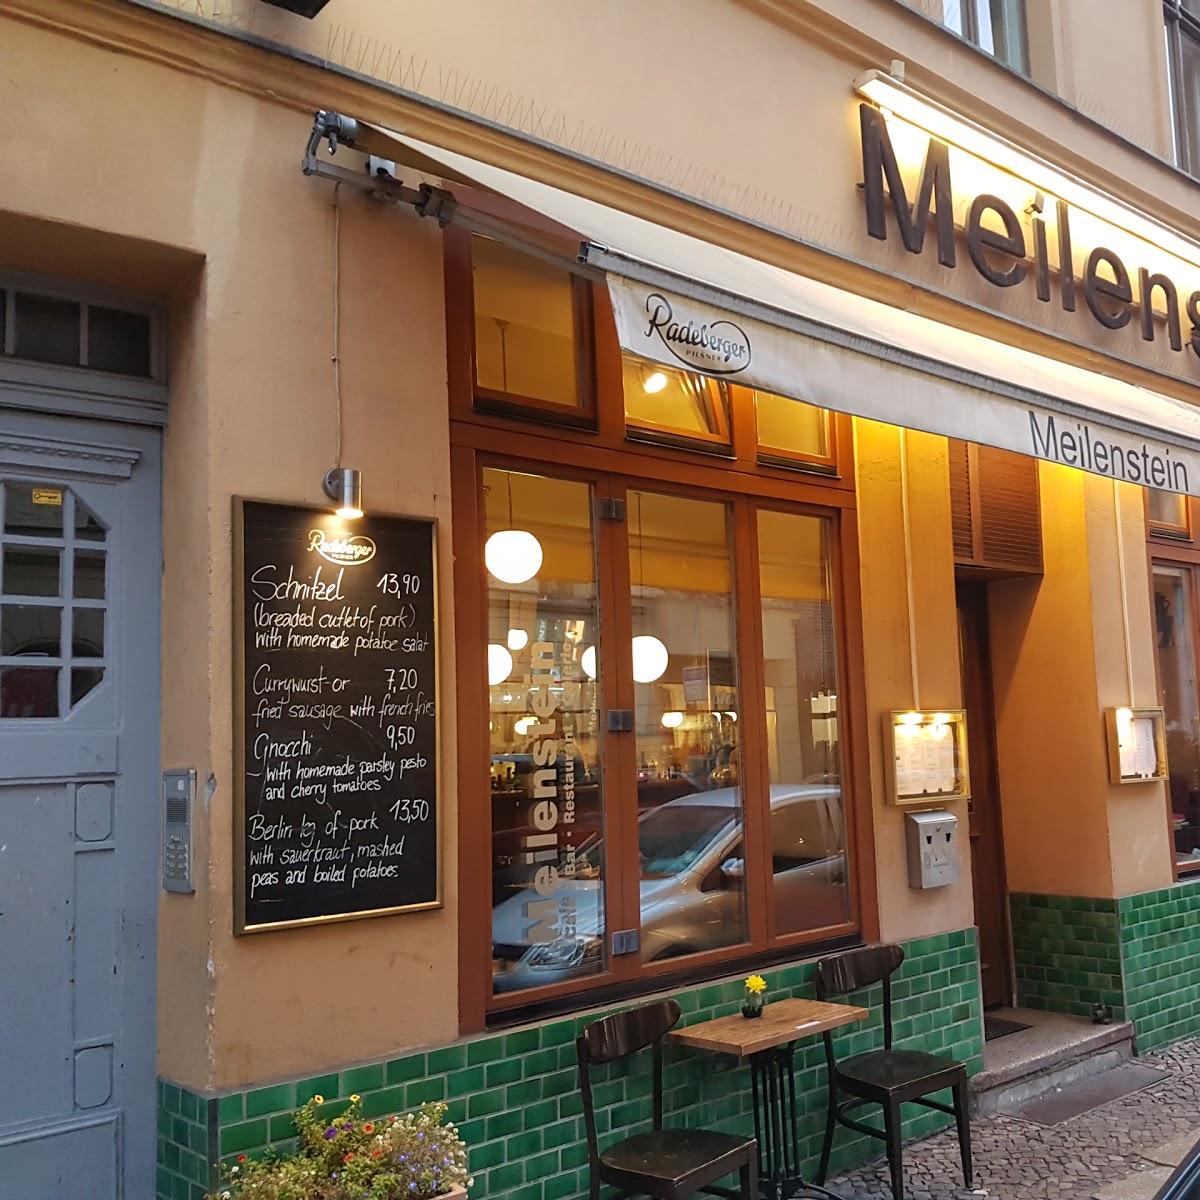 Restaurant "Meilenstein" in Berlin